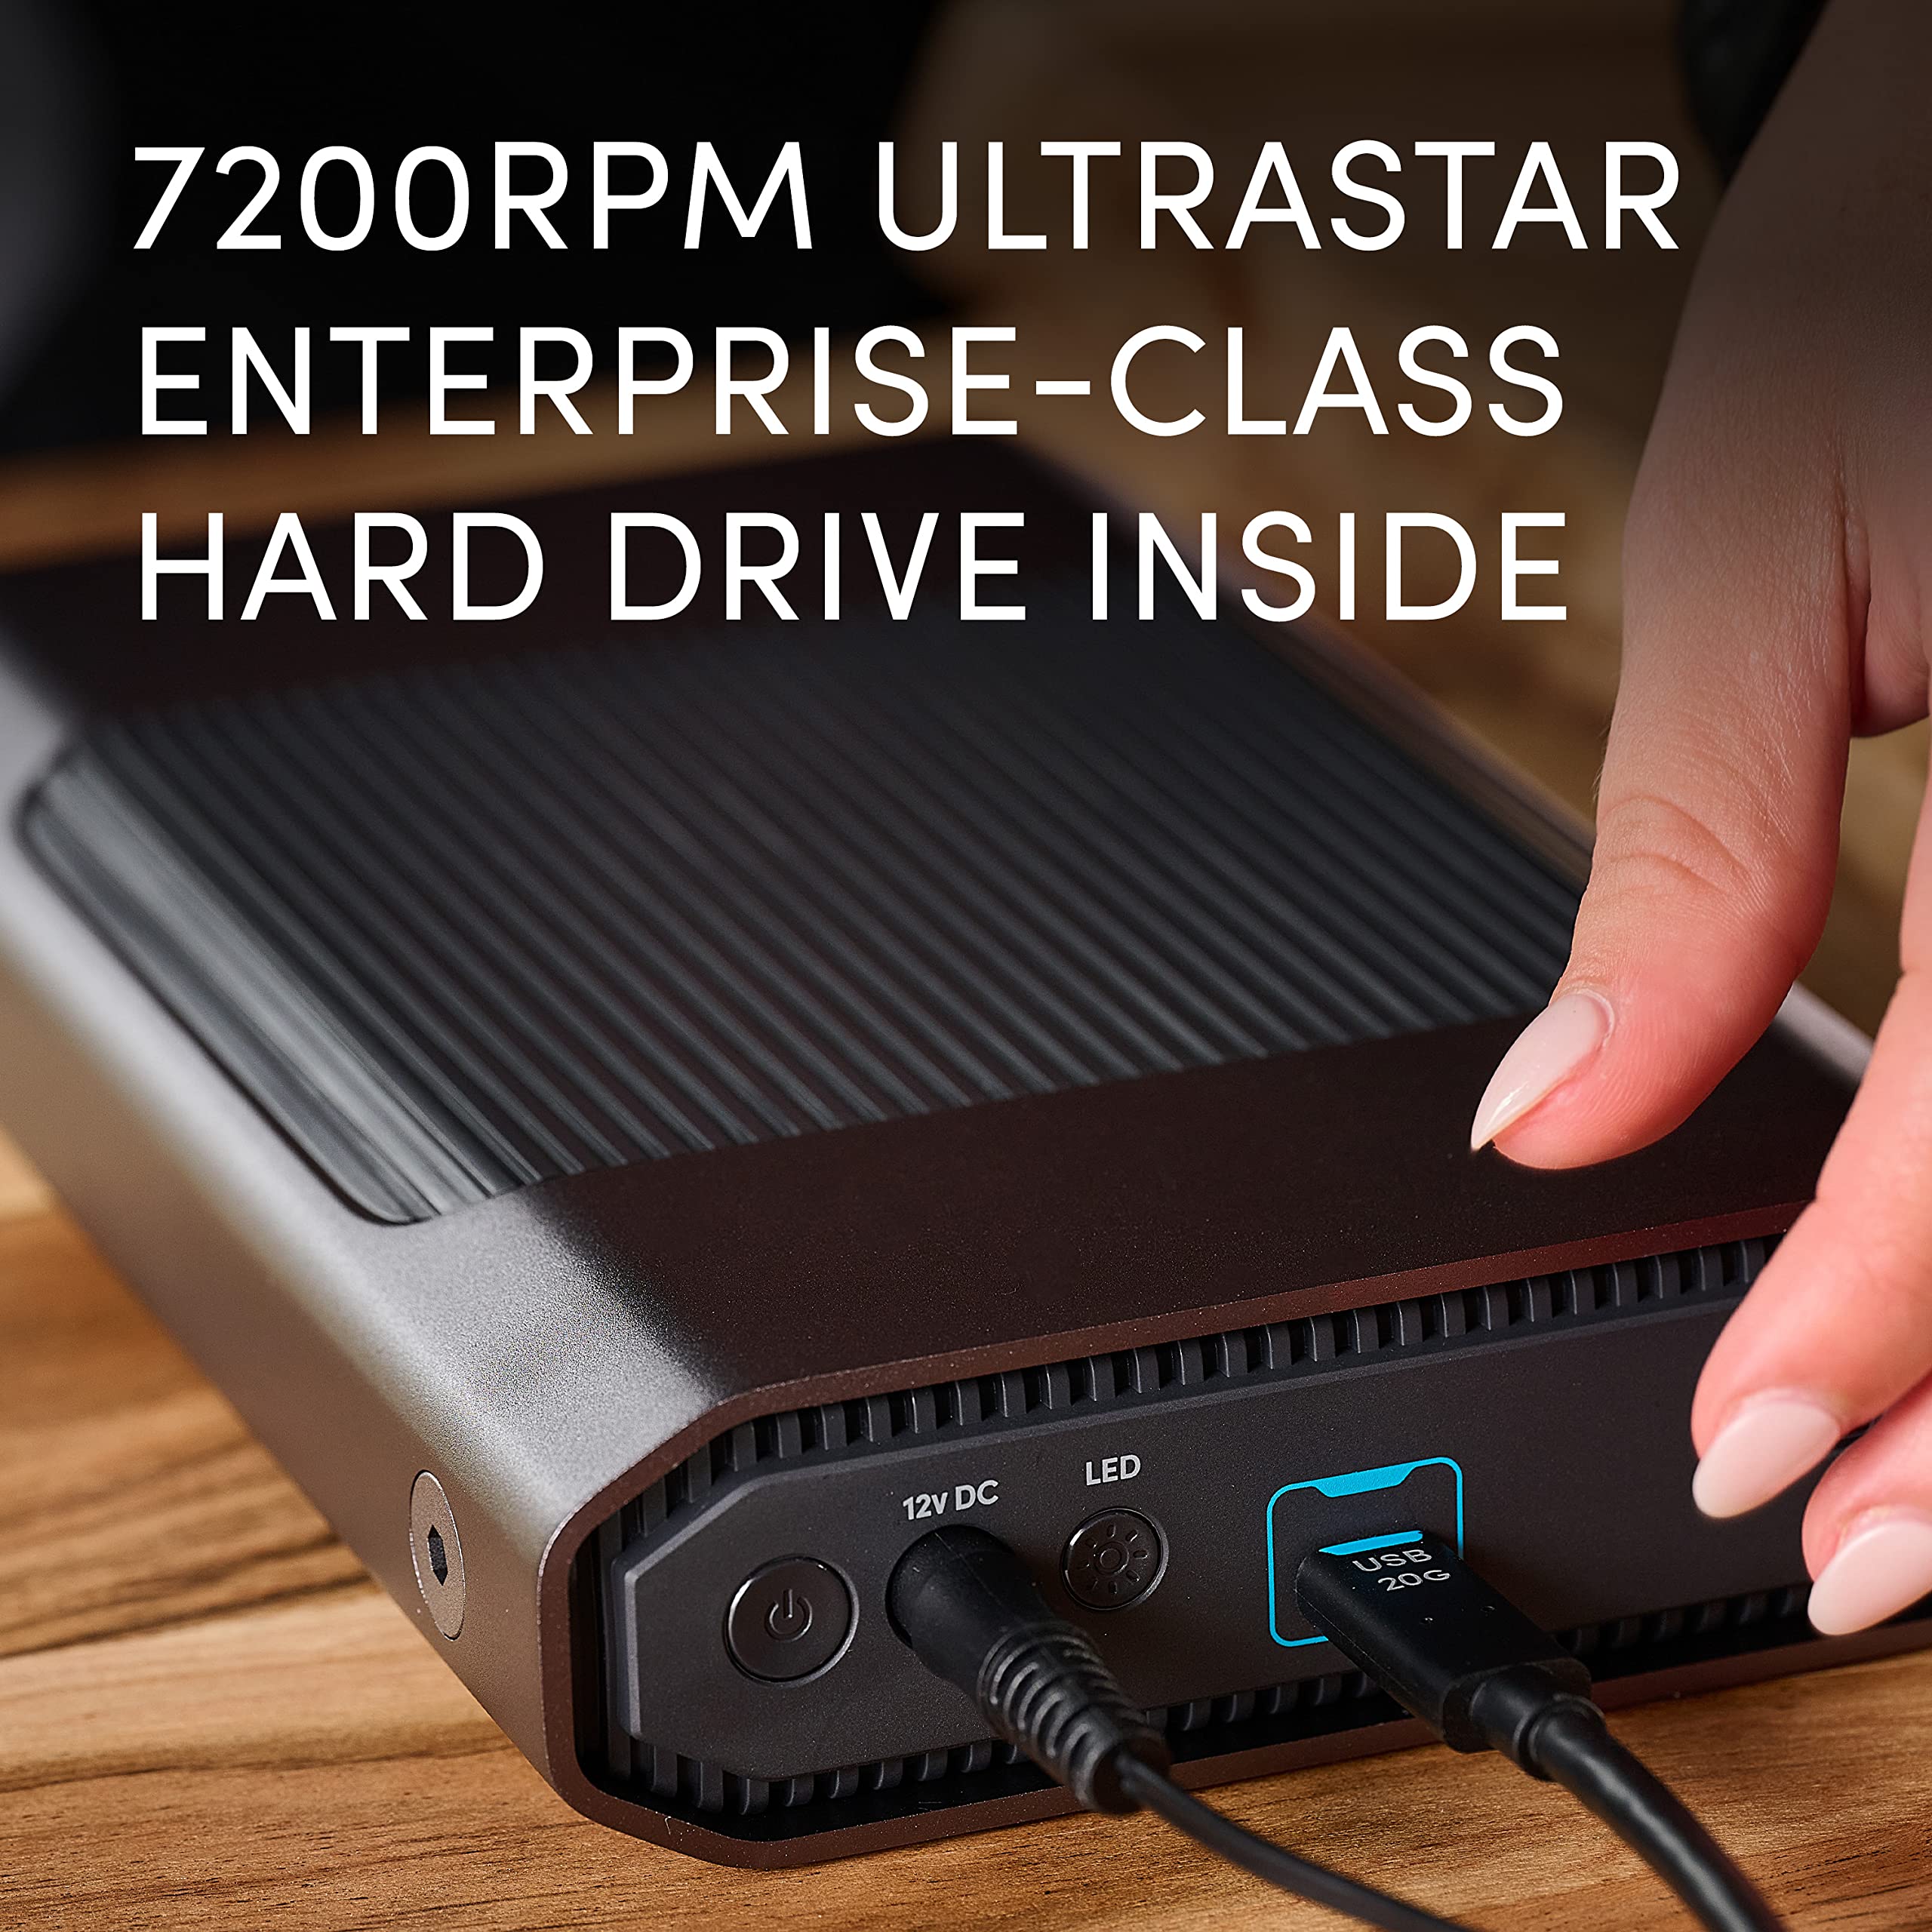 SanDisk Professional 8TB G-Drive Enterprise-Class External Desktop Hard Drive - 7200RPM Ultrastar HDD Inside, USB-C (10Gbps), USB 3.2 Gen 2, Mac Ready - SDPHF1A-008T-NBAAD